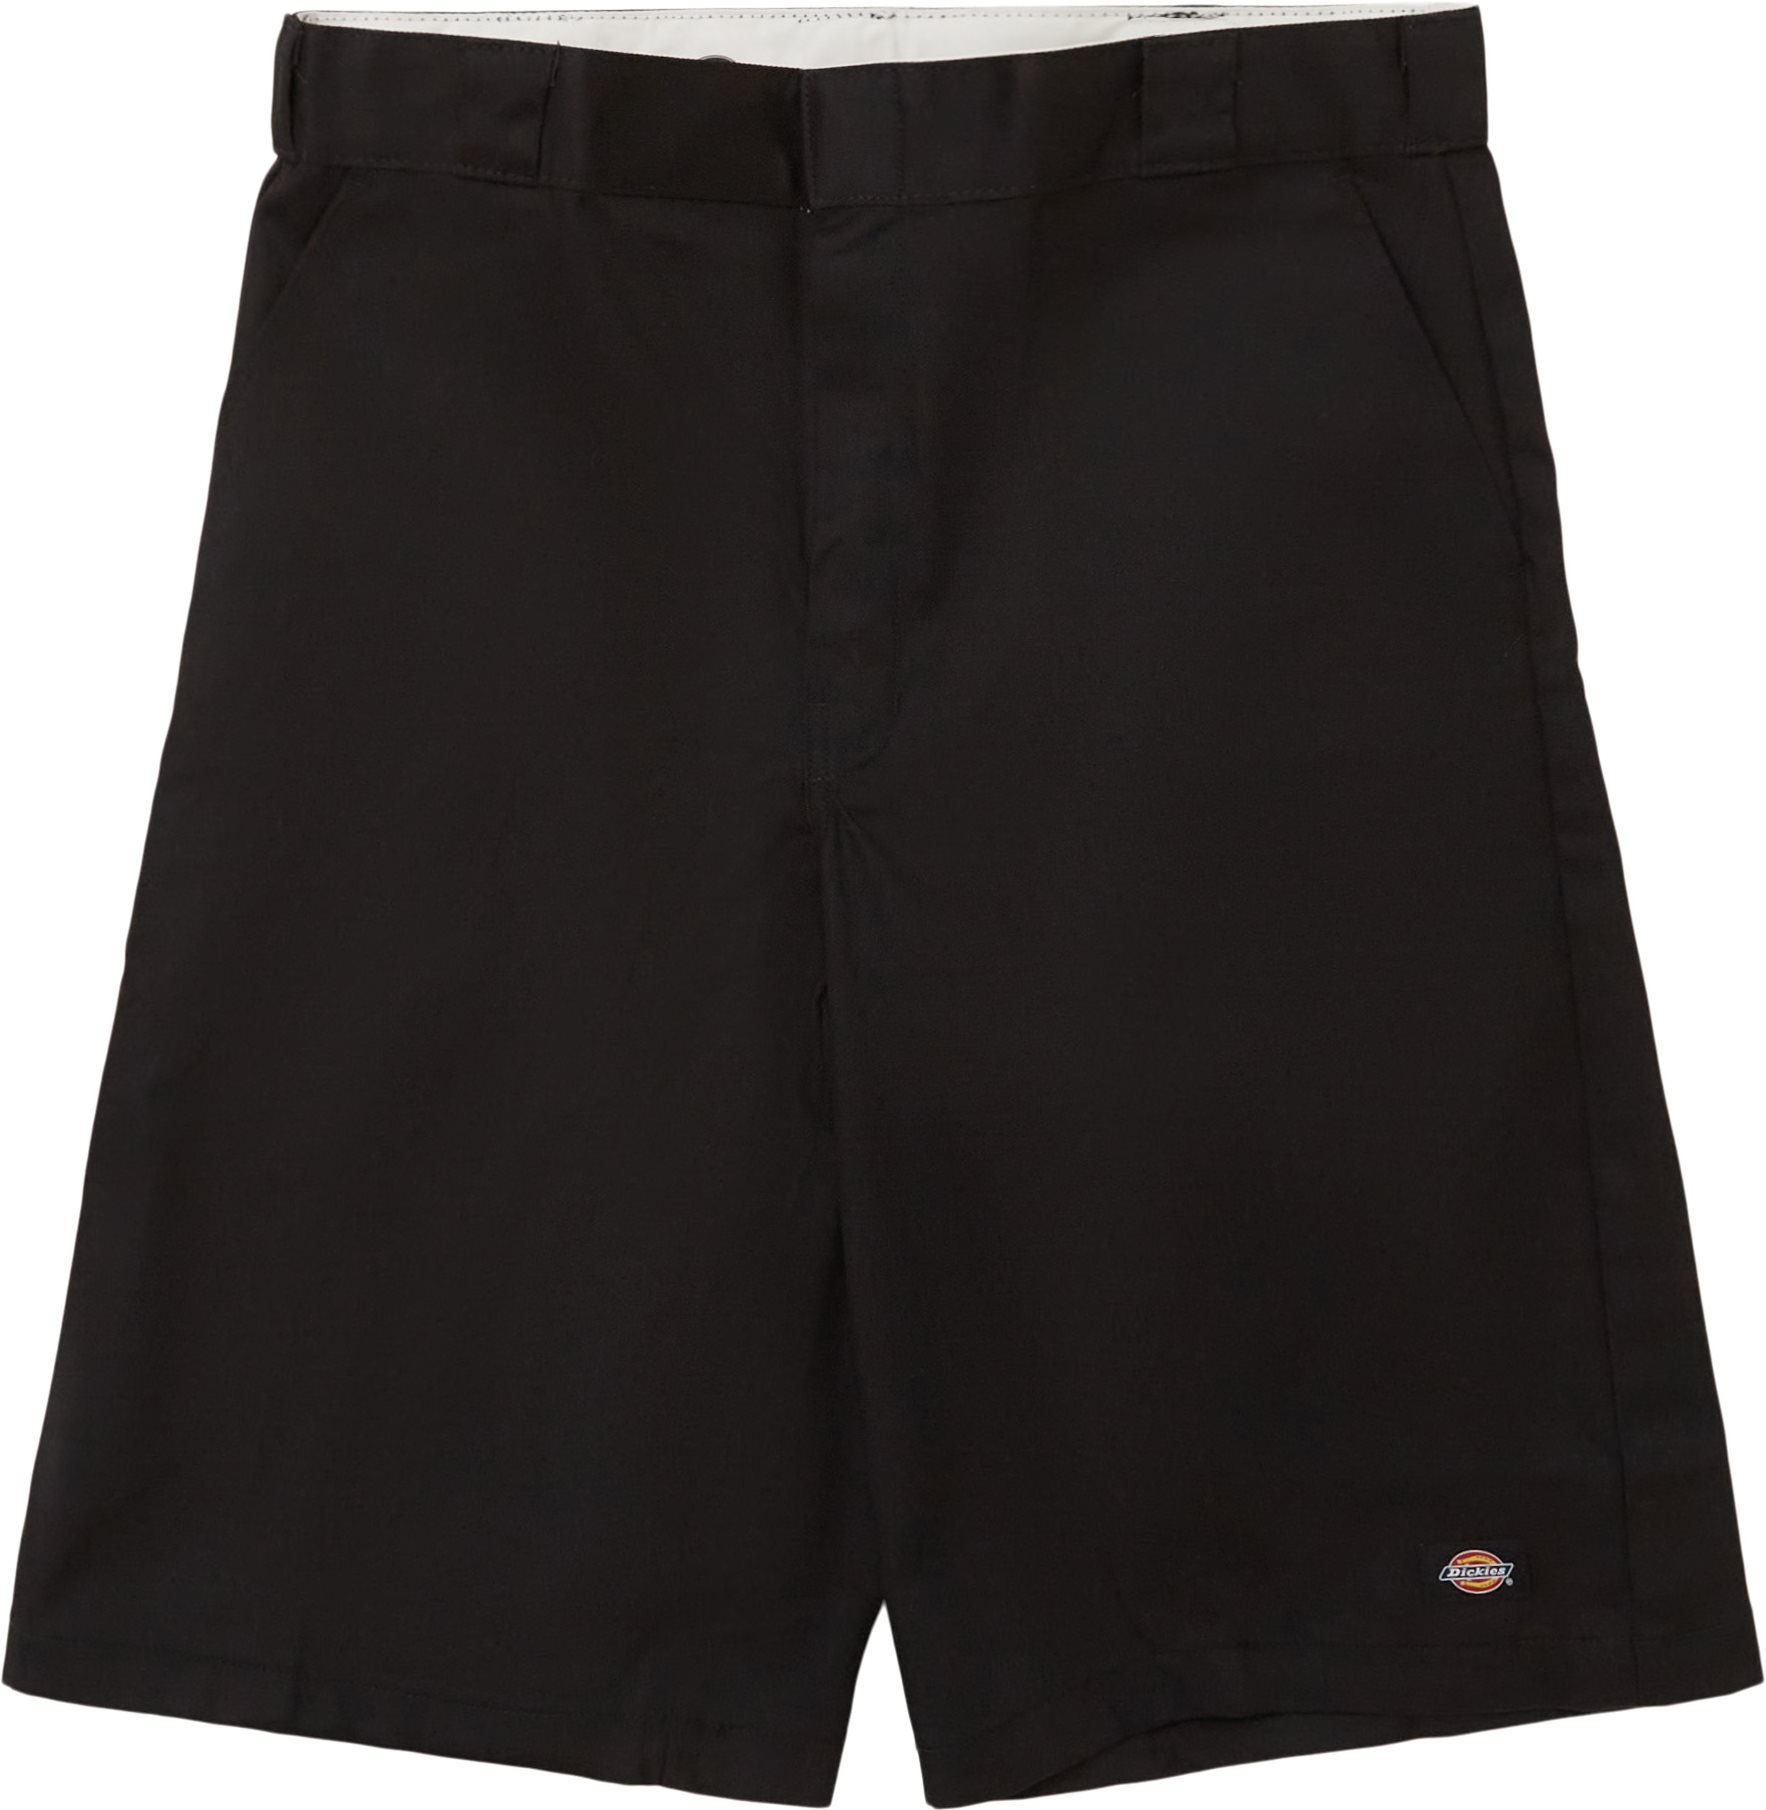 13 Work Shorts - Shorts - Regular fit - Black